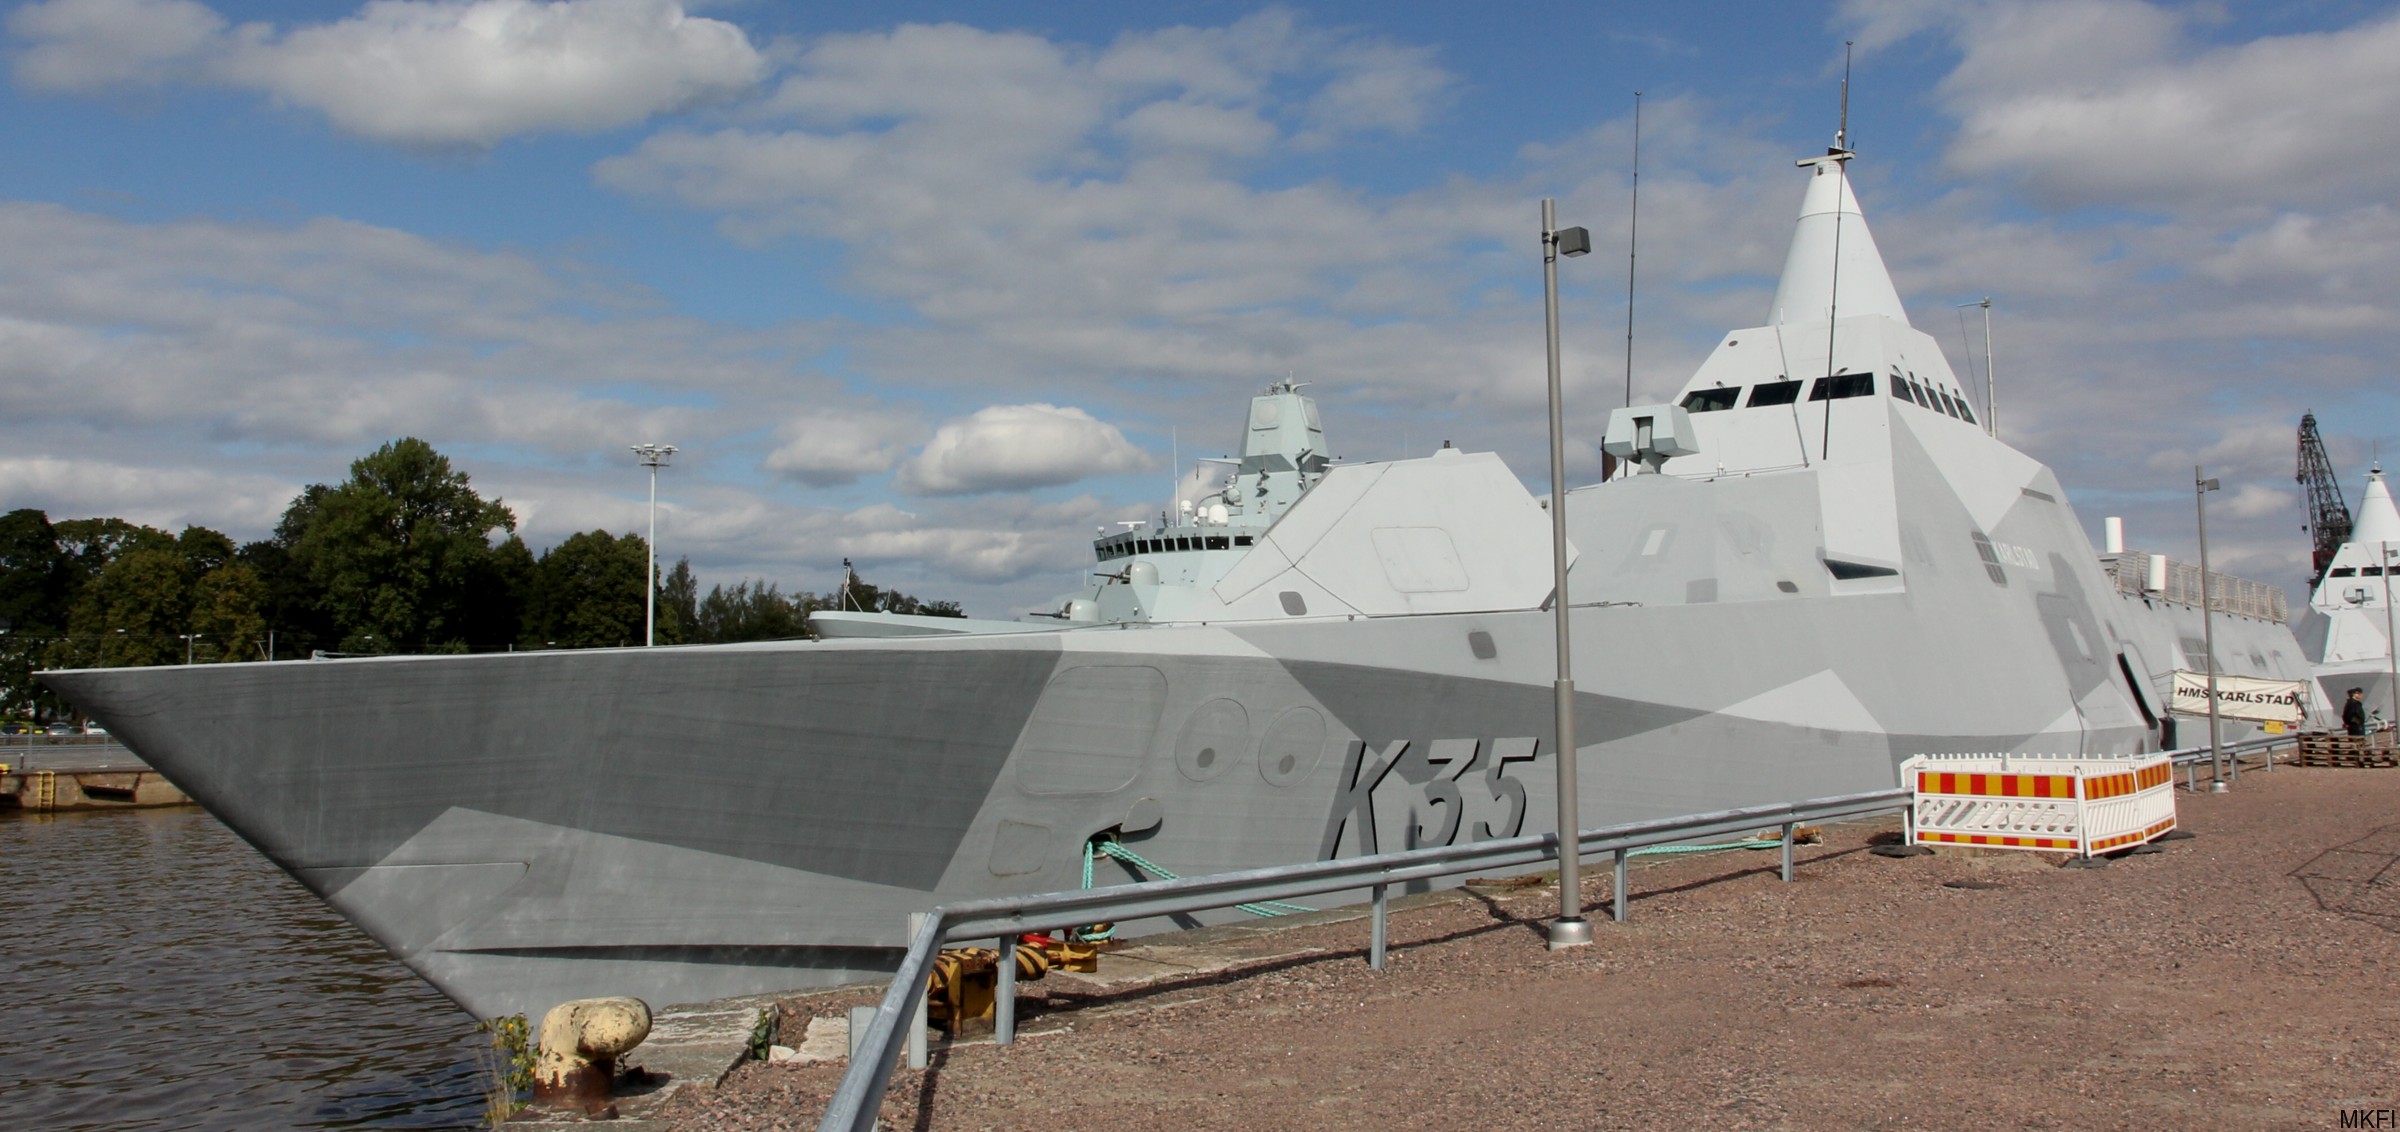 k35 hswms hms karlstad visby class corvette royal swedish navy svenska marinen 20